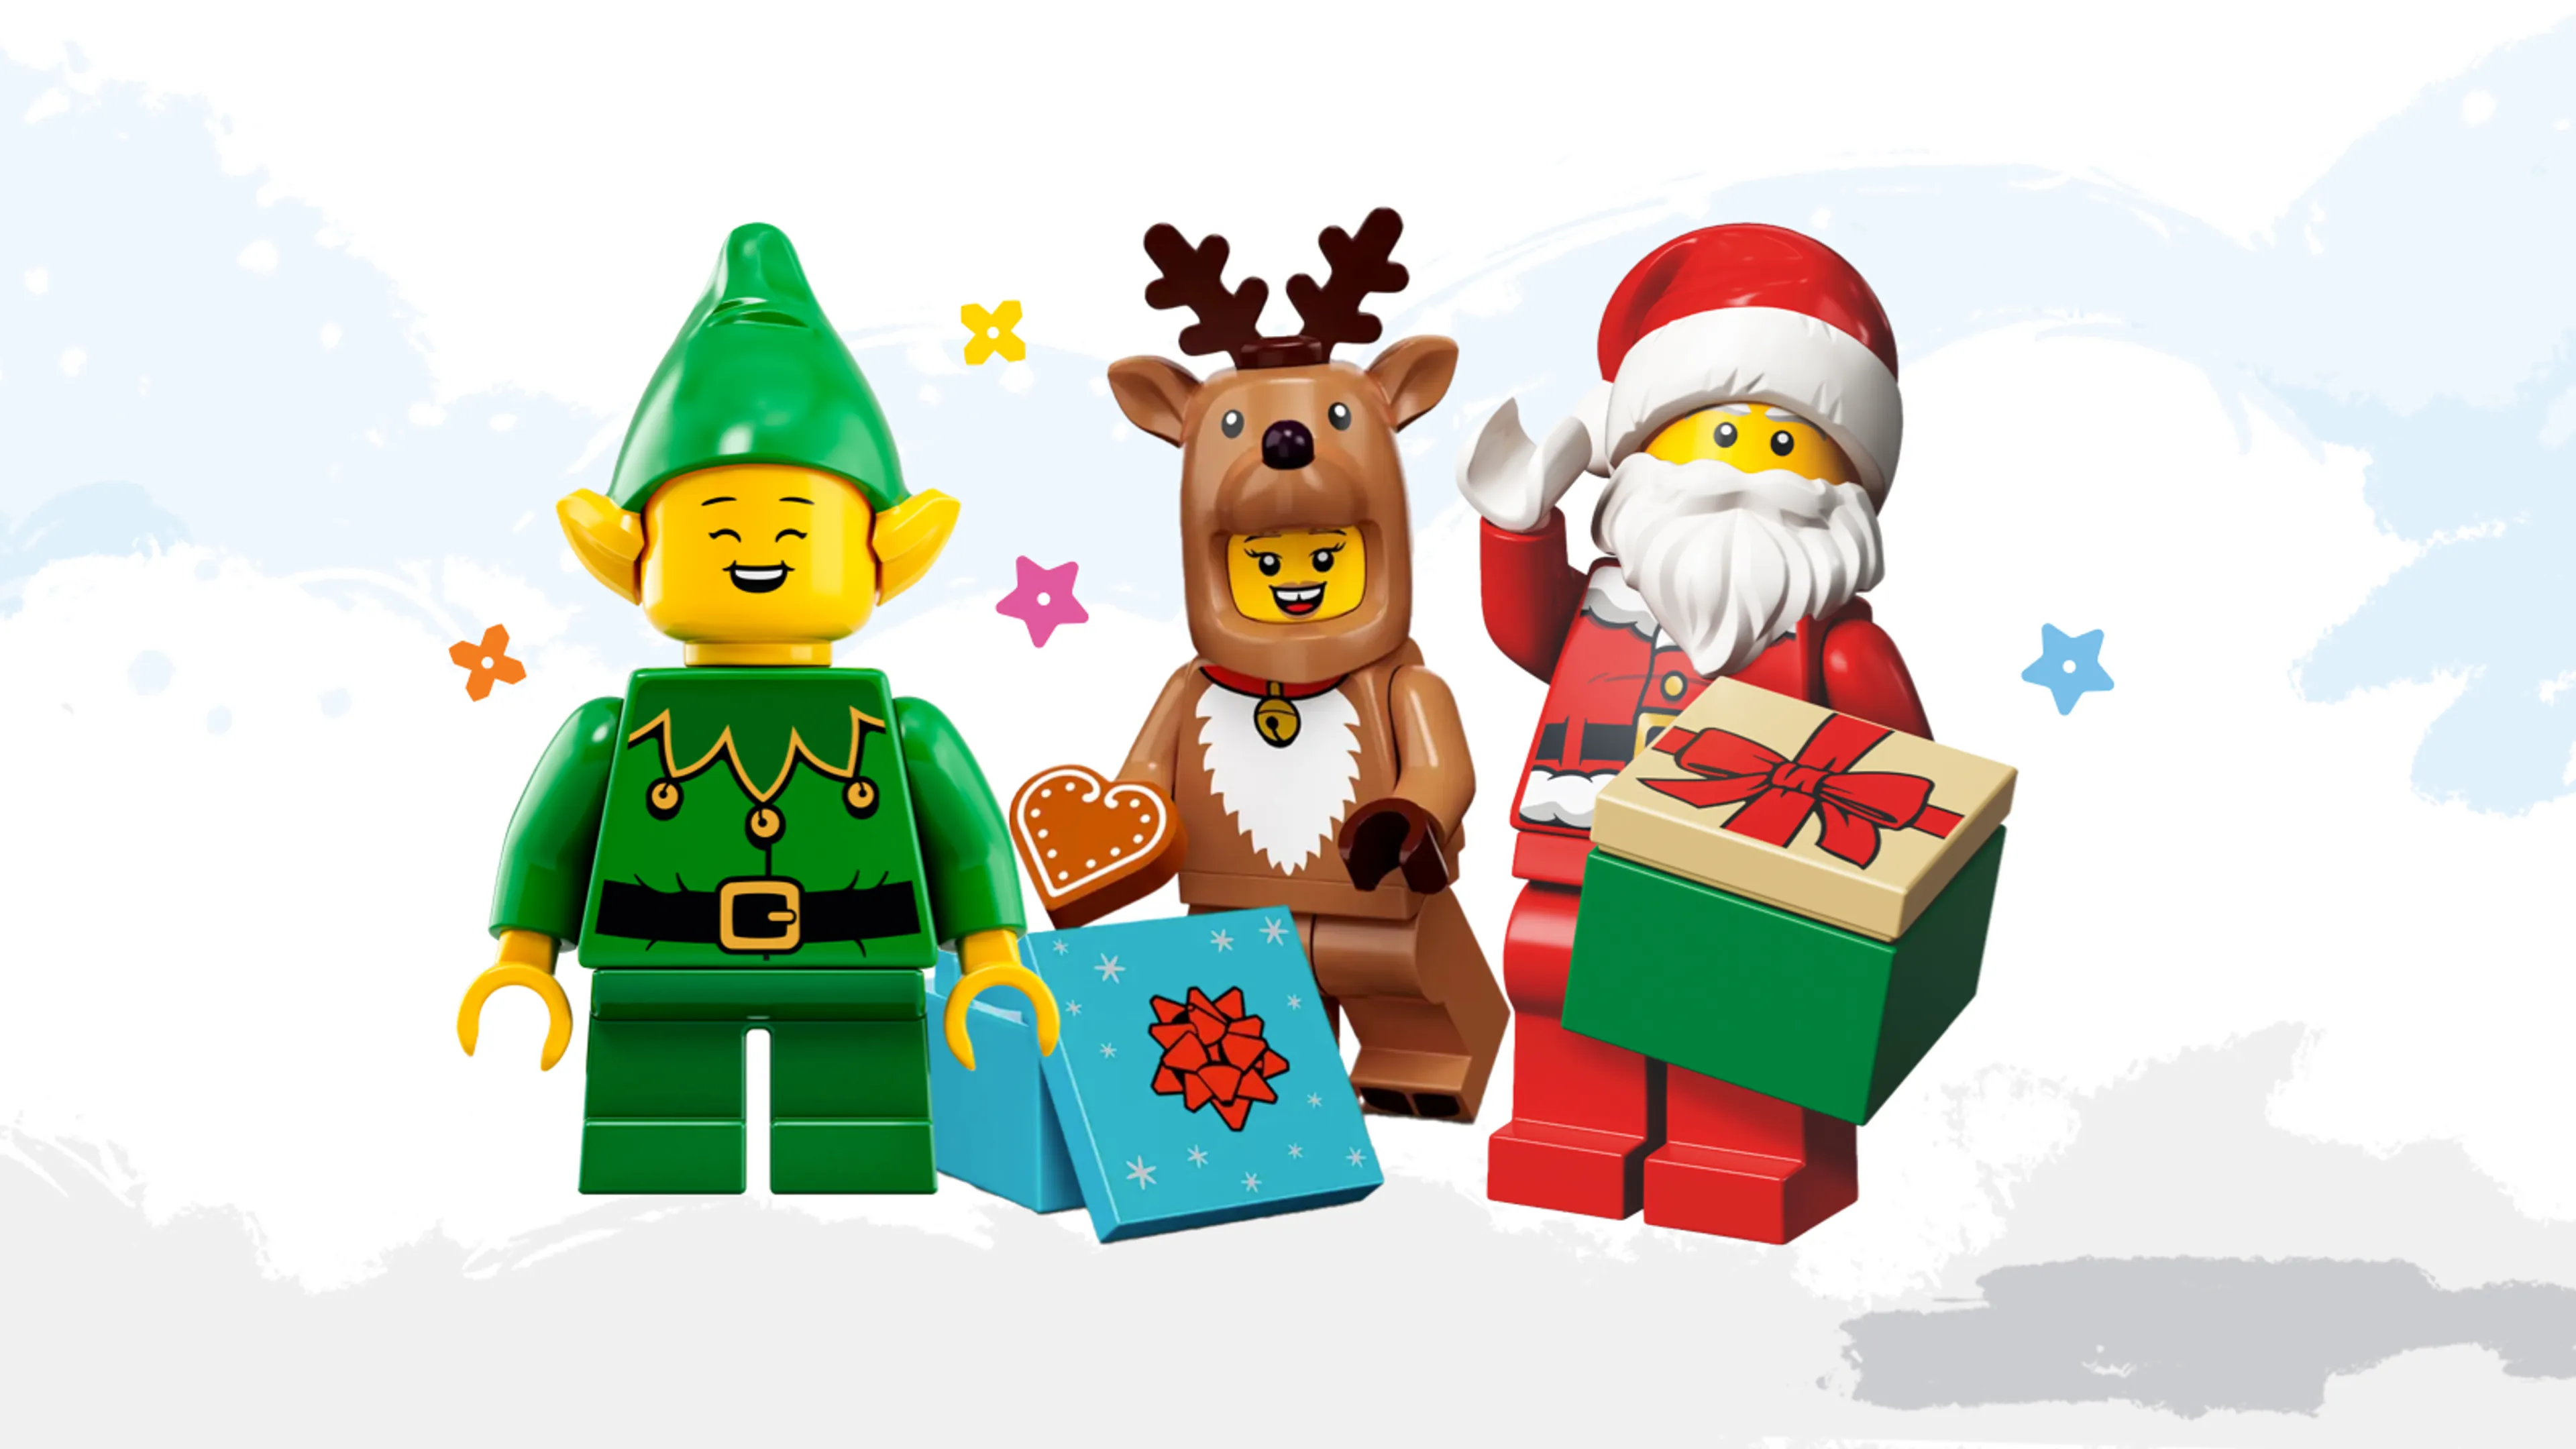 Elf, reindeer and Santa minifigures with presents